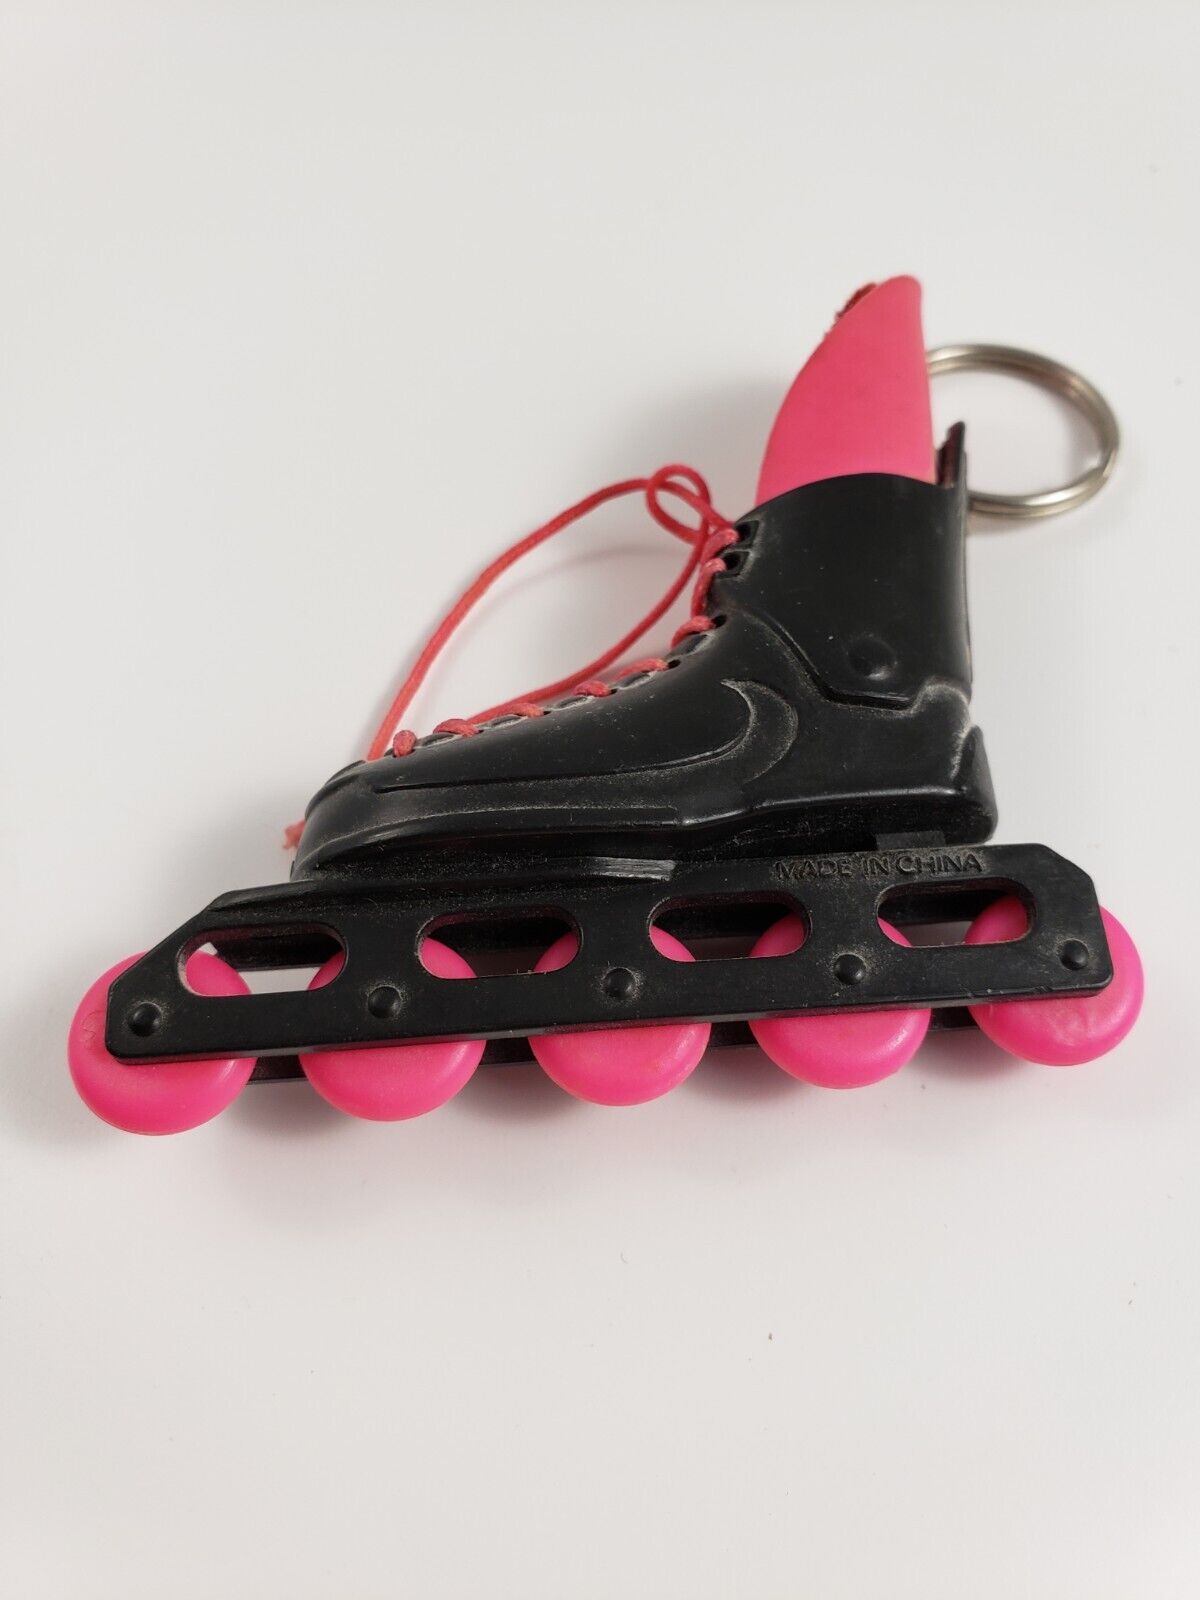 Vintage 1990s Rollerblade Skate  Black and Pink Key Chain Ring